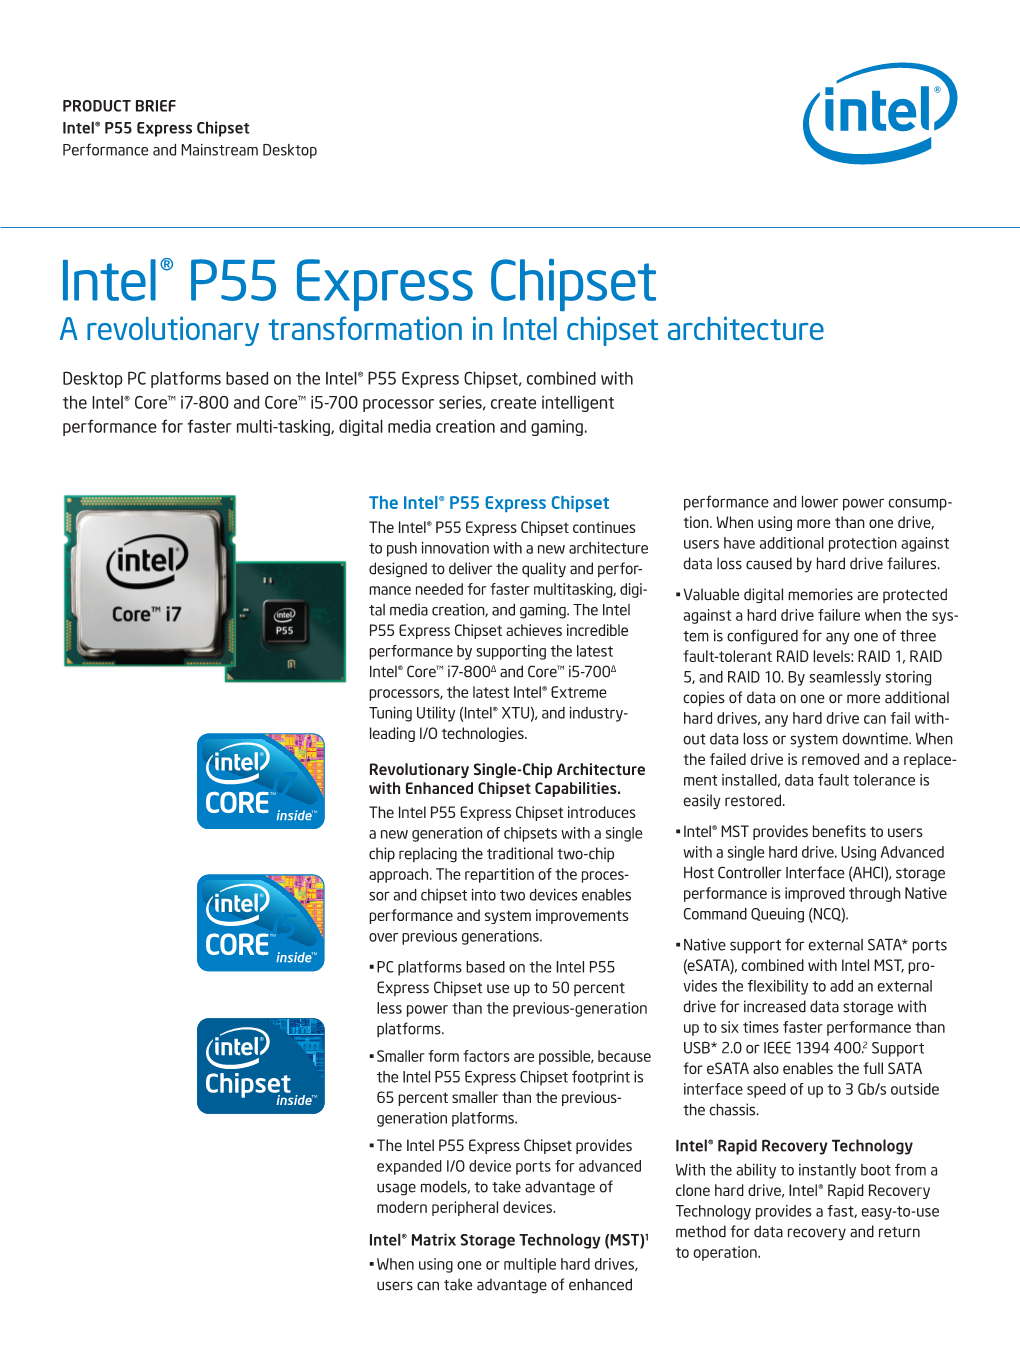 Intel® P55 Express Chipset Performance and Mainstream Desktop